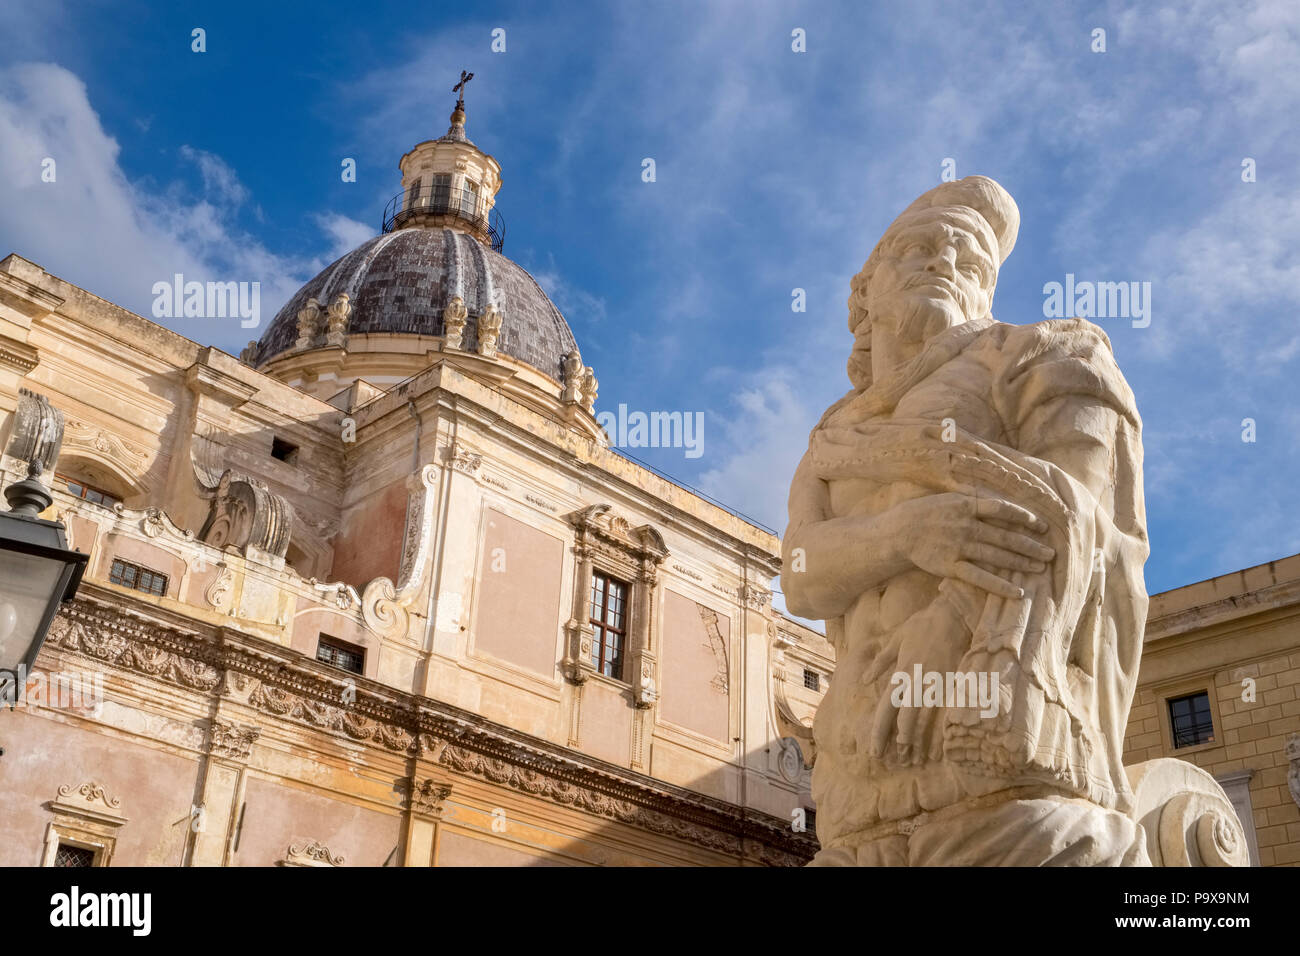 Part of the Fontana Pretoria, Praetorian Fountain, on Piazza Pretoria in Palermo, Sicily, Italy, Europe showing Santa Caterina dome in the background Stock Photo